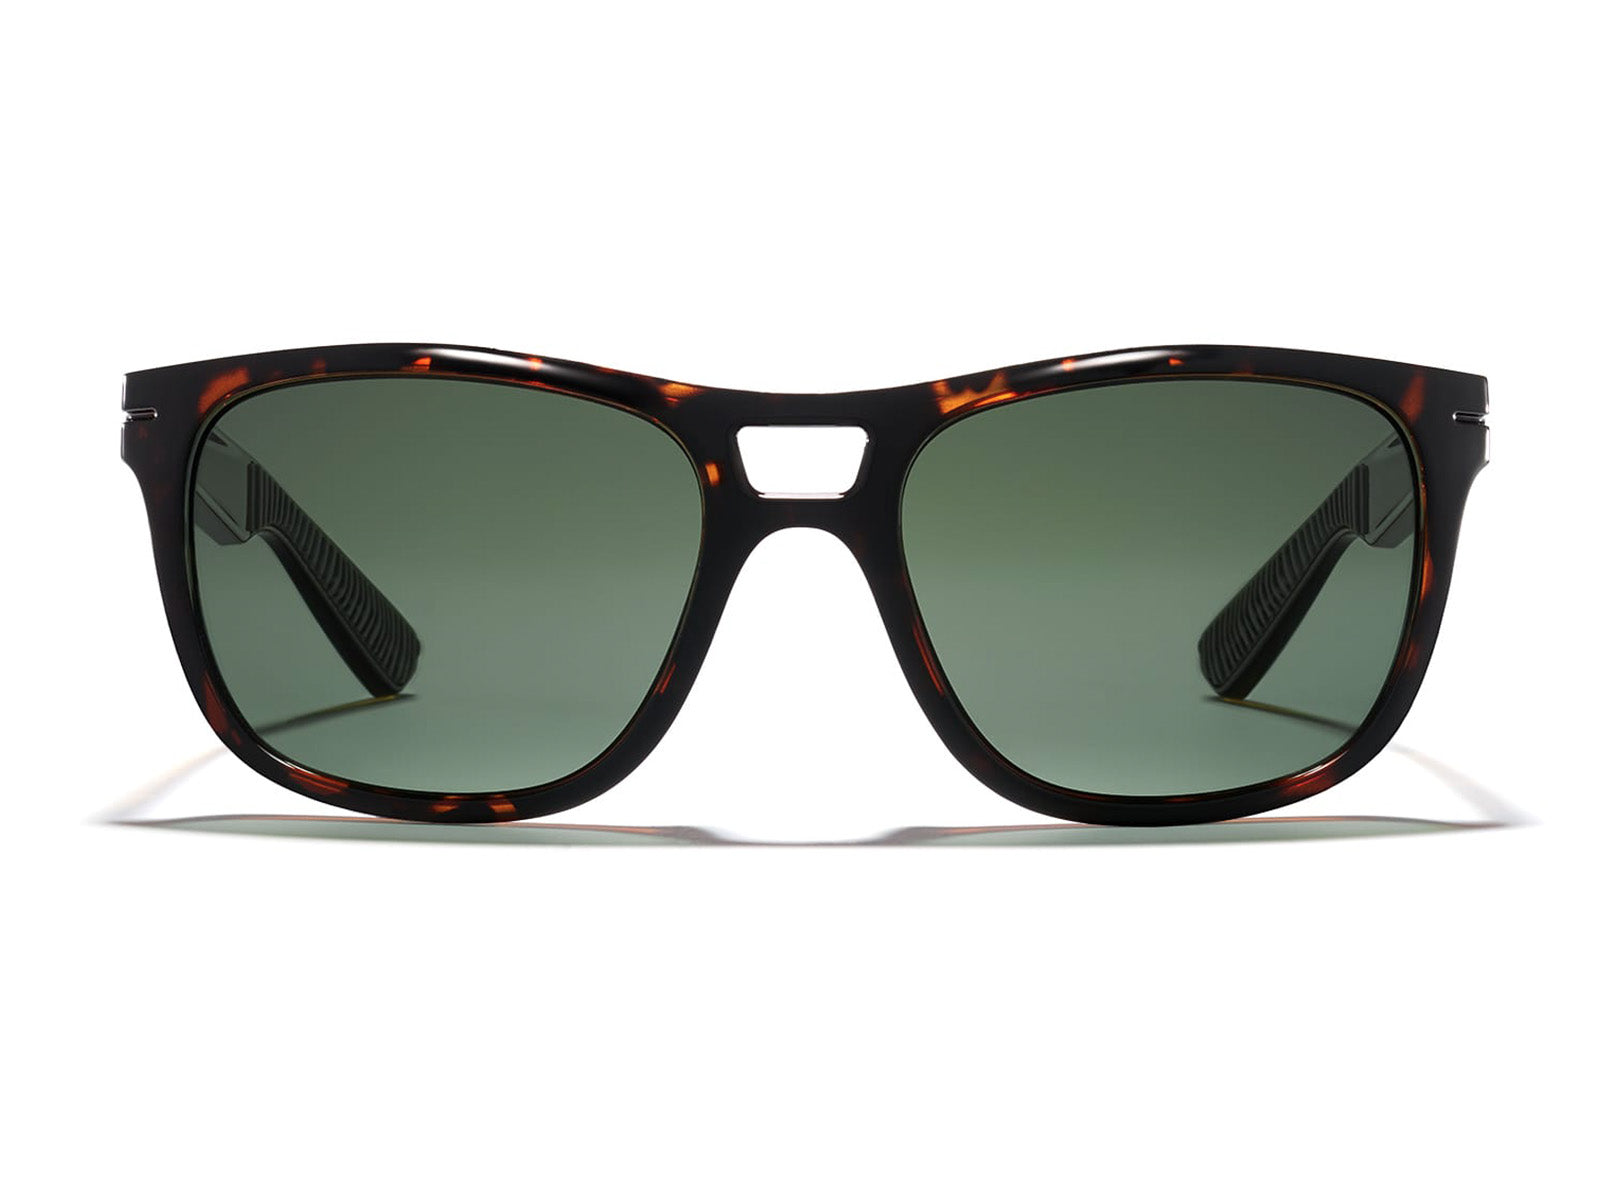 Vendée Sunglasses - Polarized Sunglasses - Mirrored Sunnies